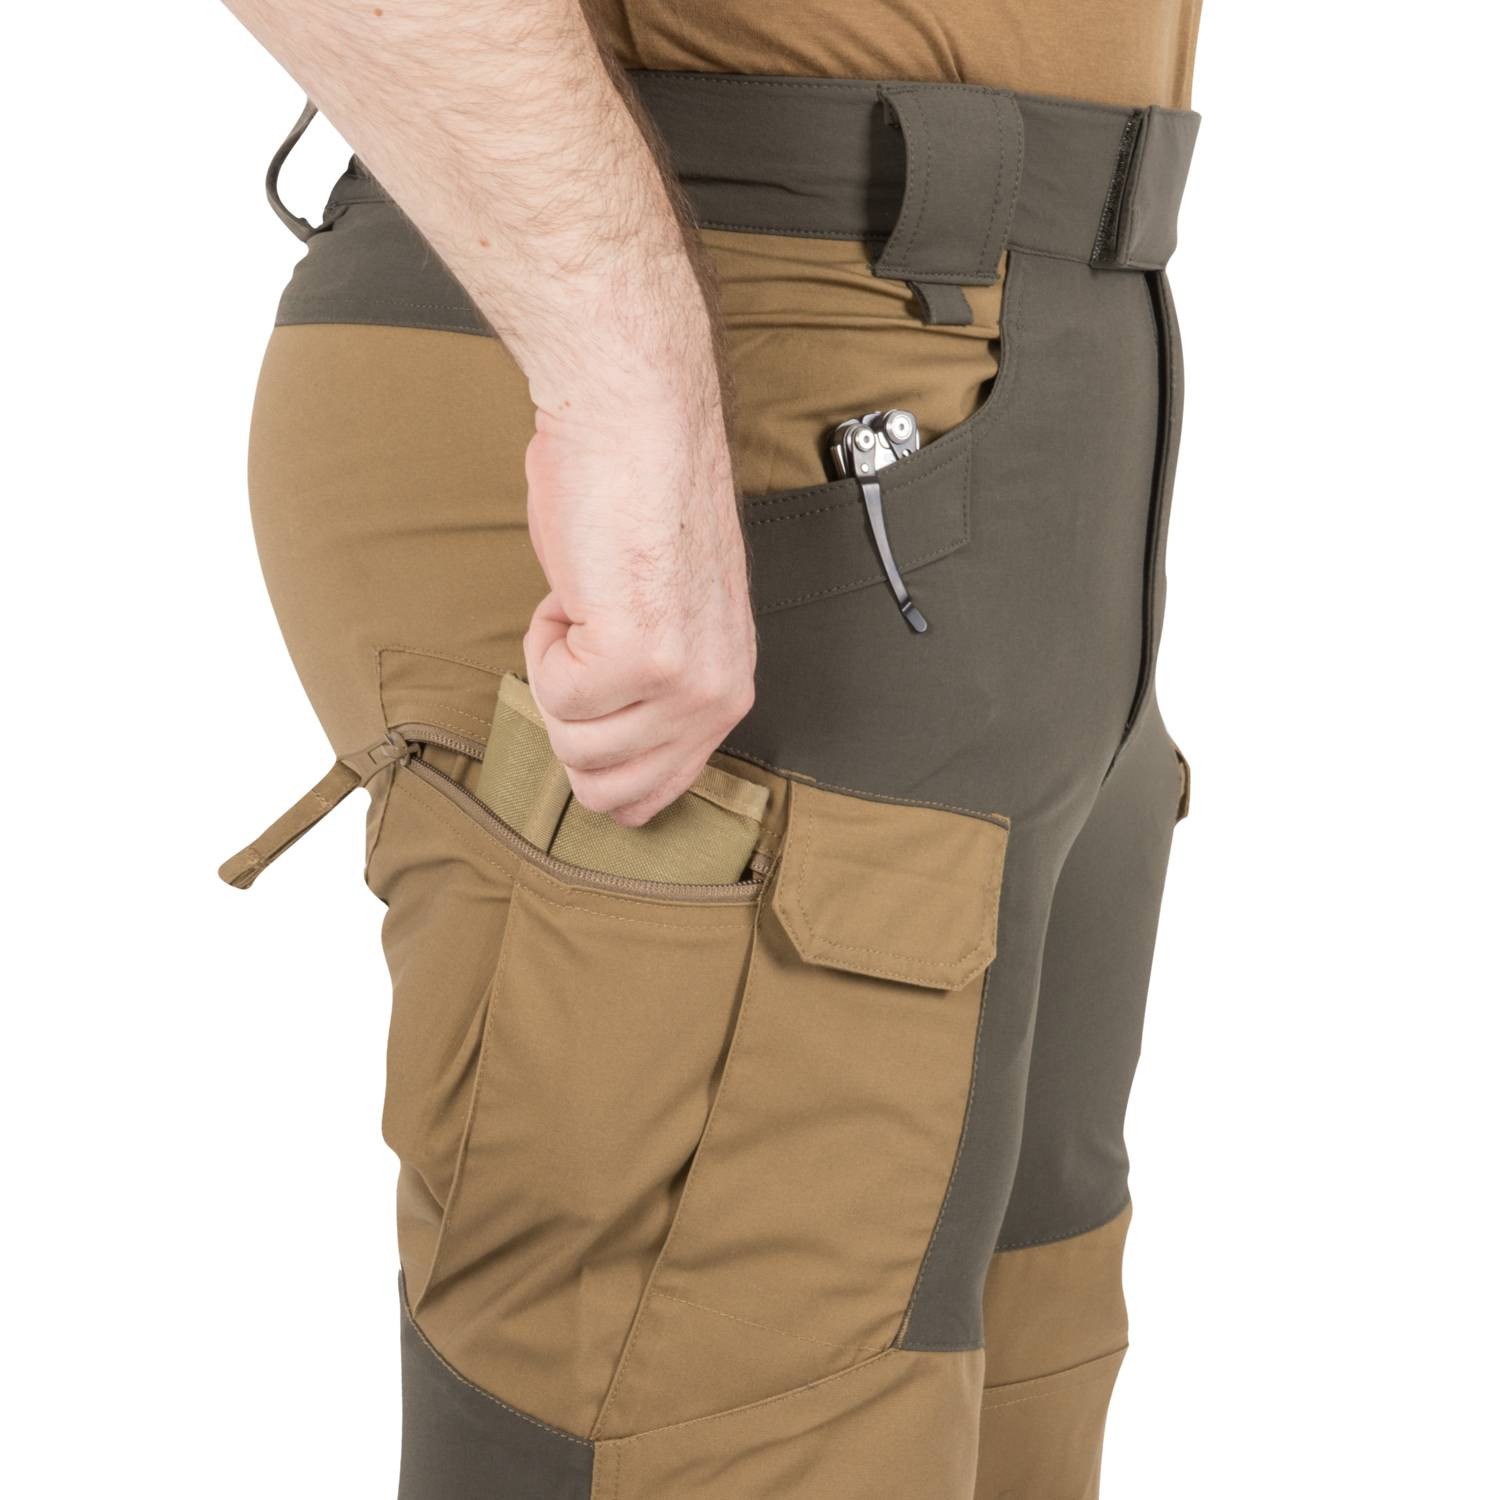 Kalhoty Helikon HYBRID OUTBACK PANTS - DuraCanvas - ern - Kliknutm na obrzek zavete